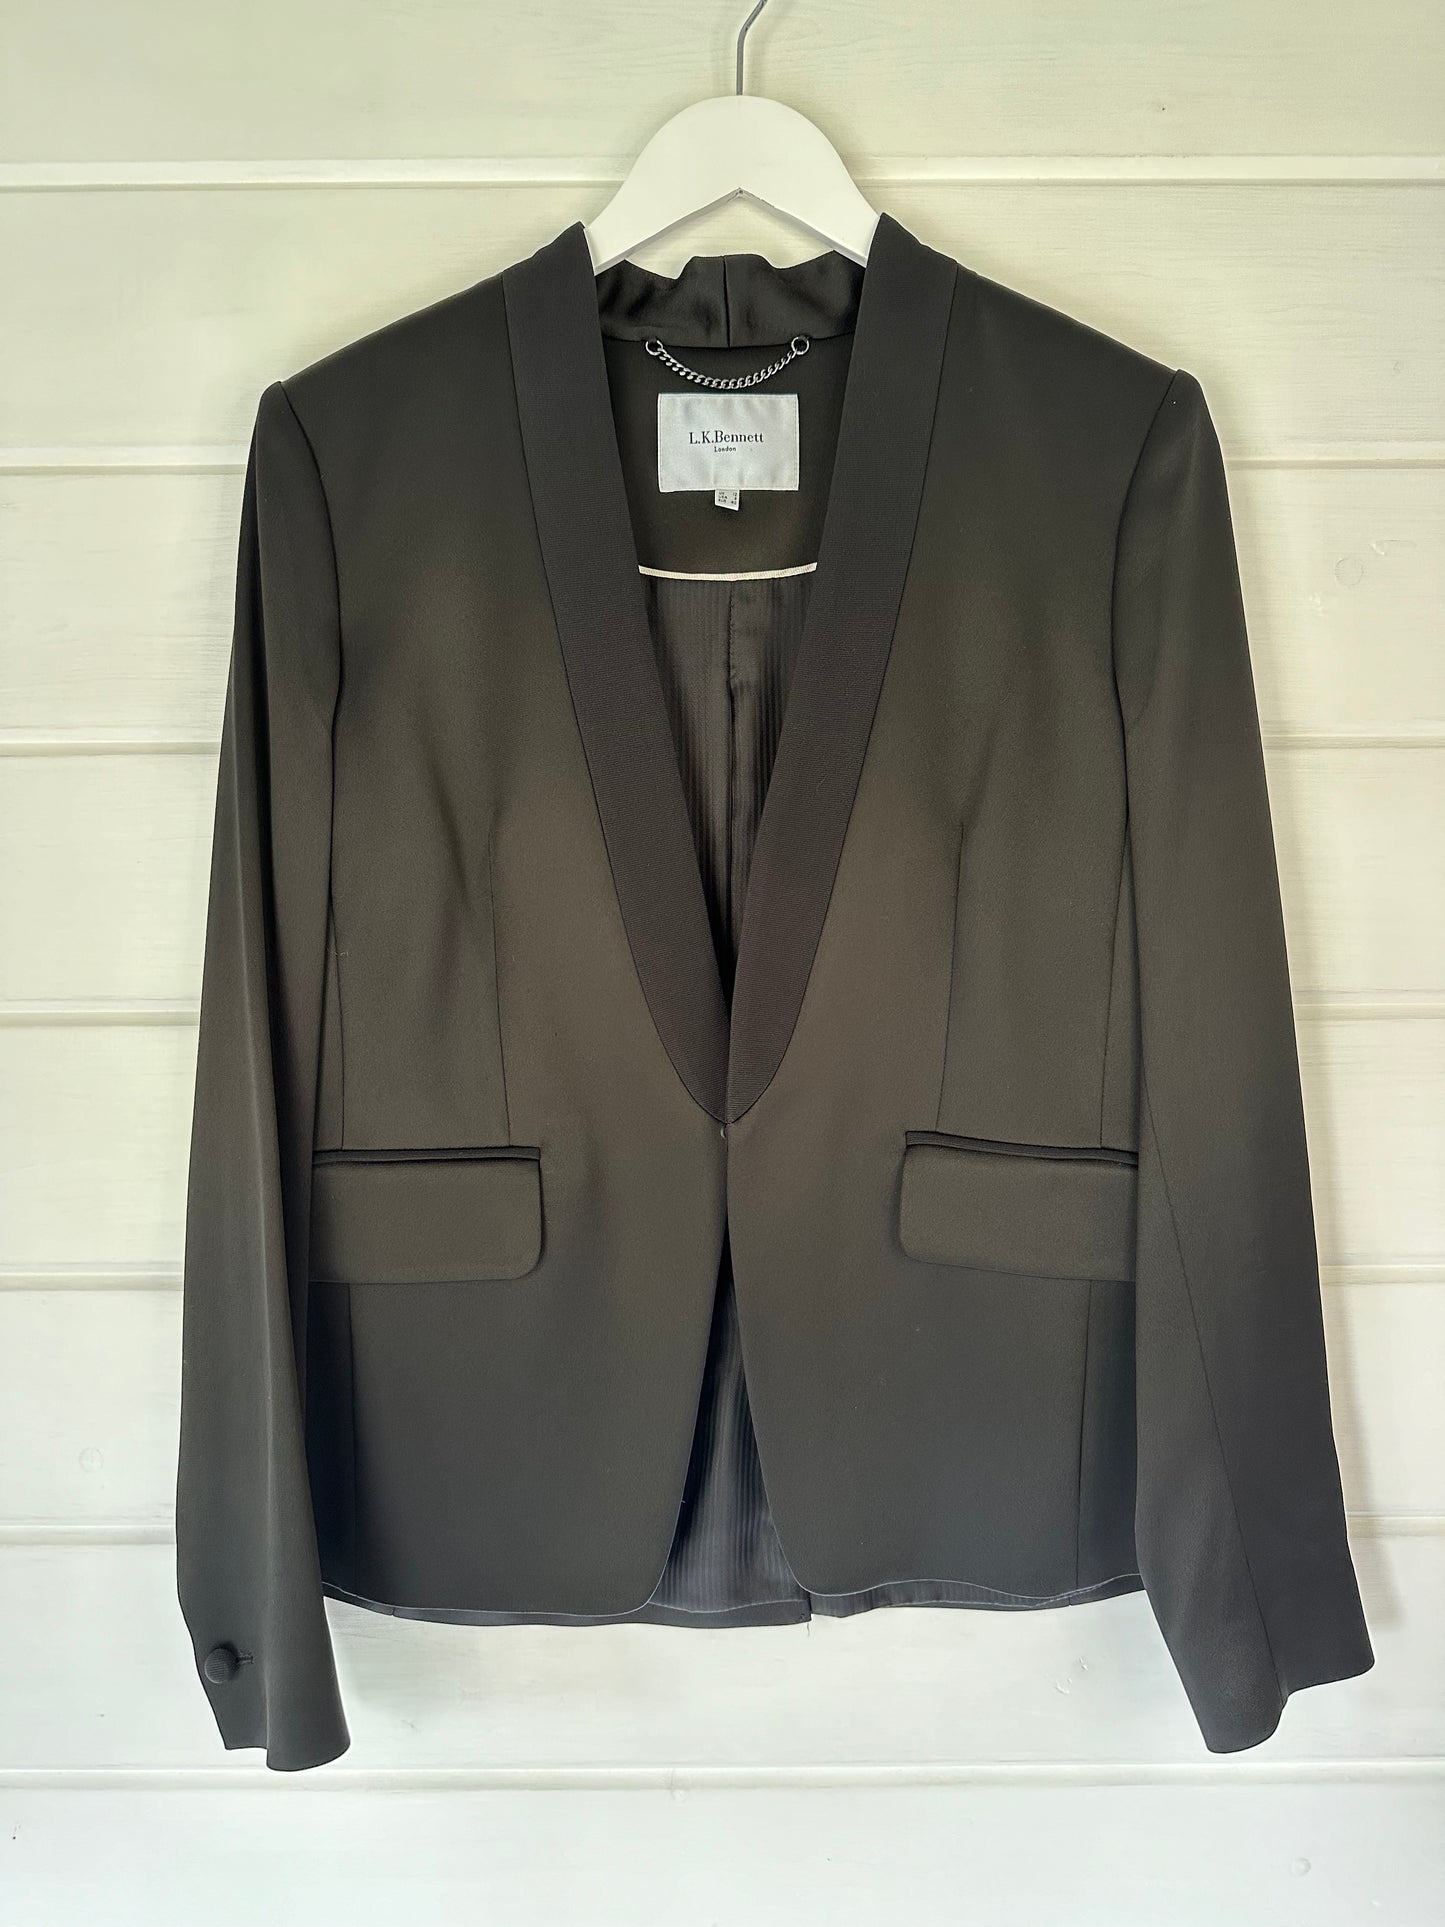 LK Bennett Tuxedo Jacket - Size 12